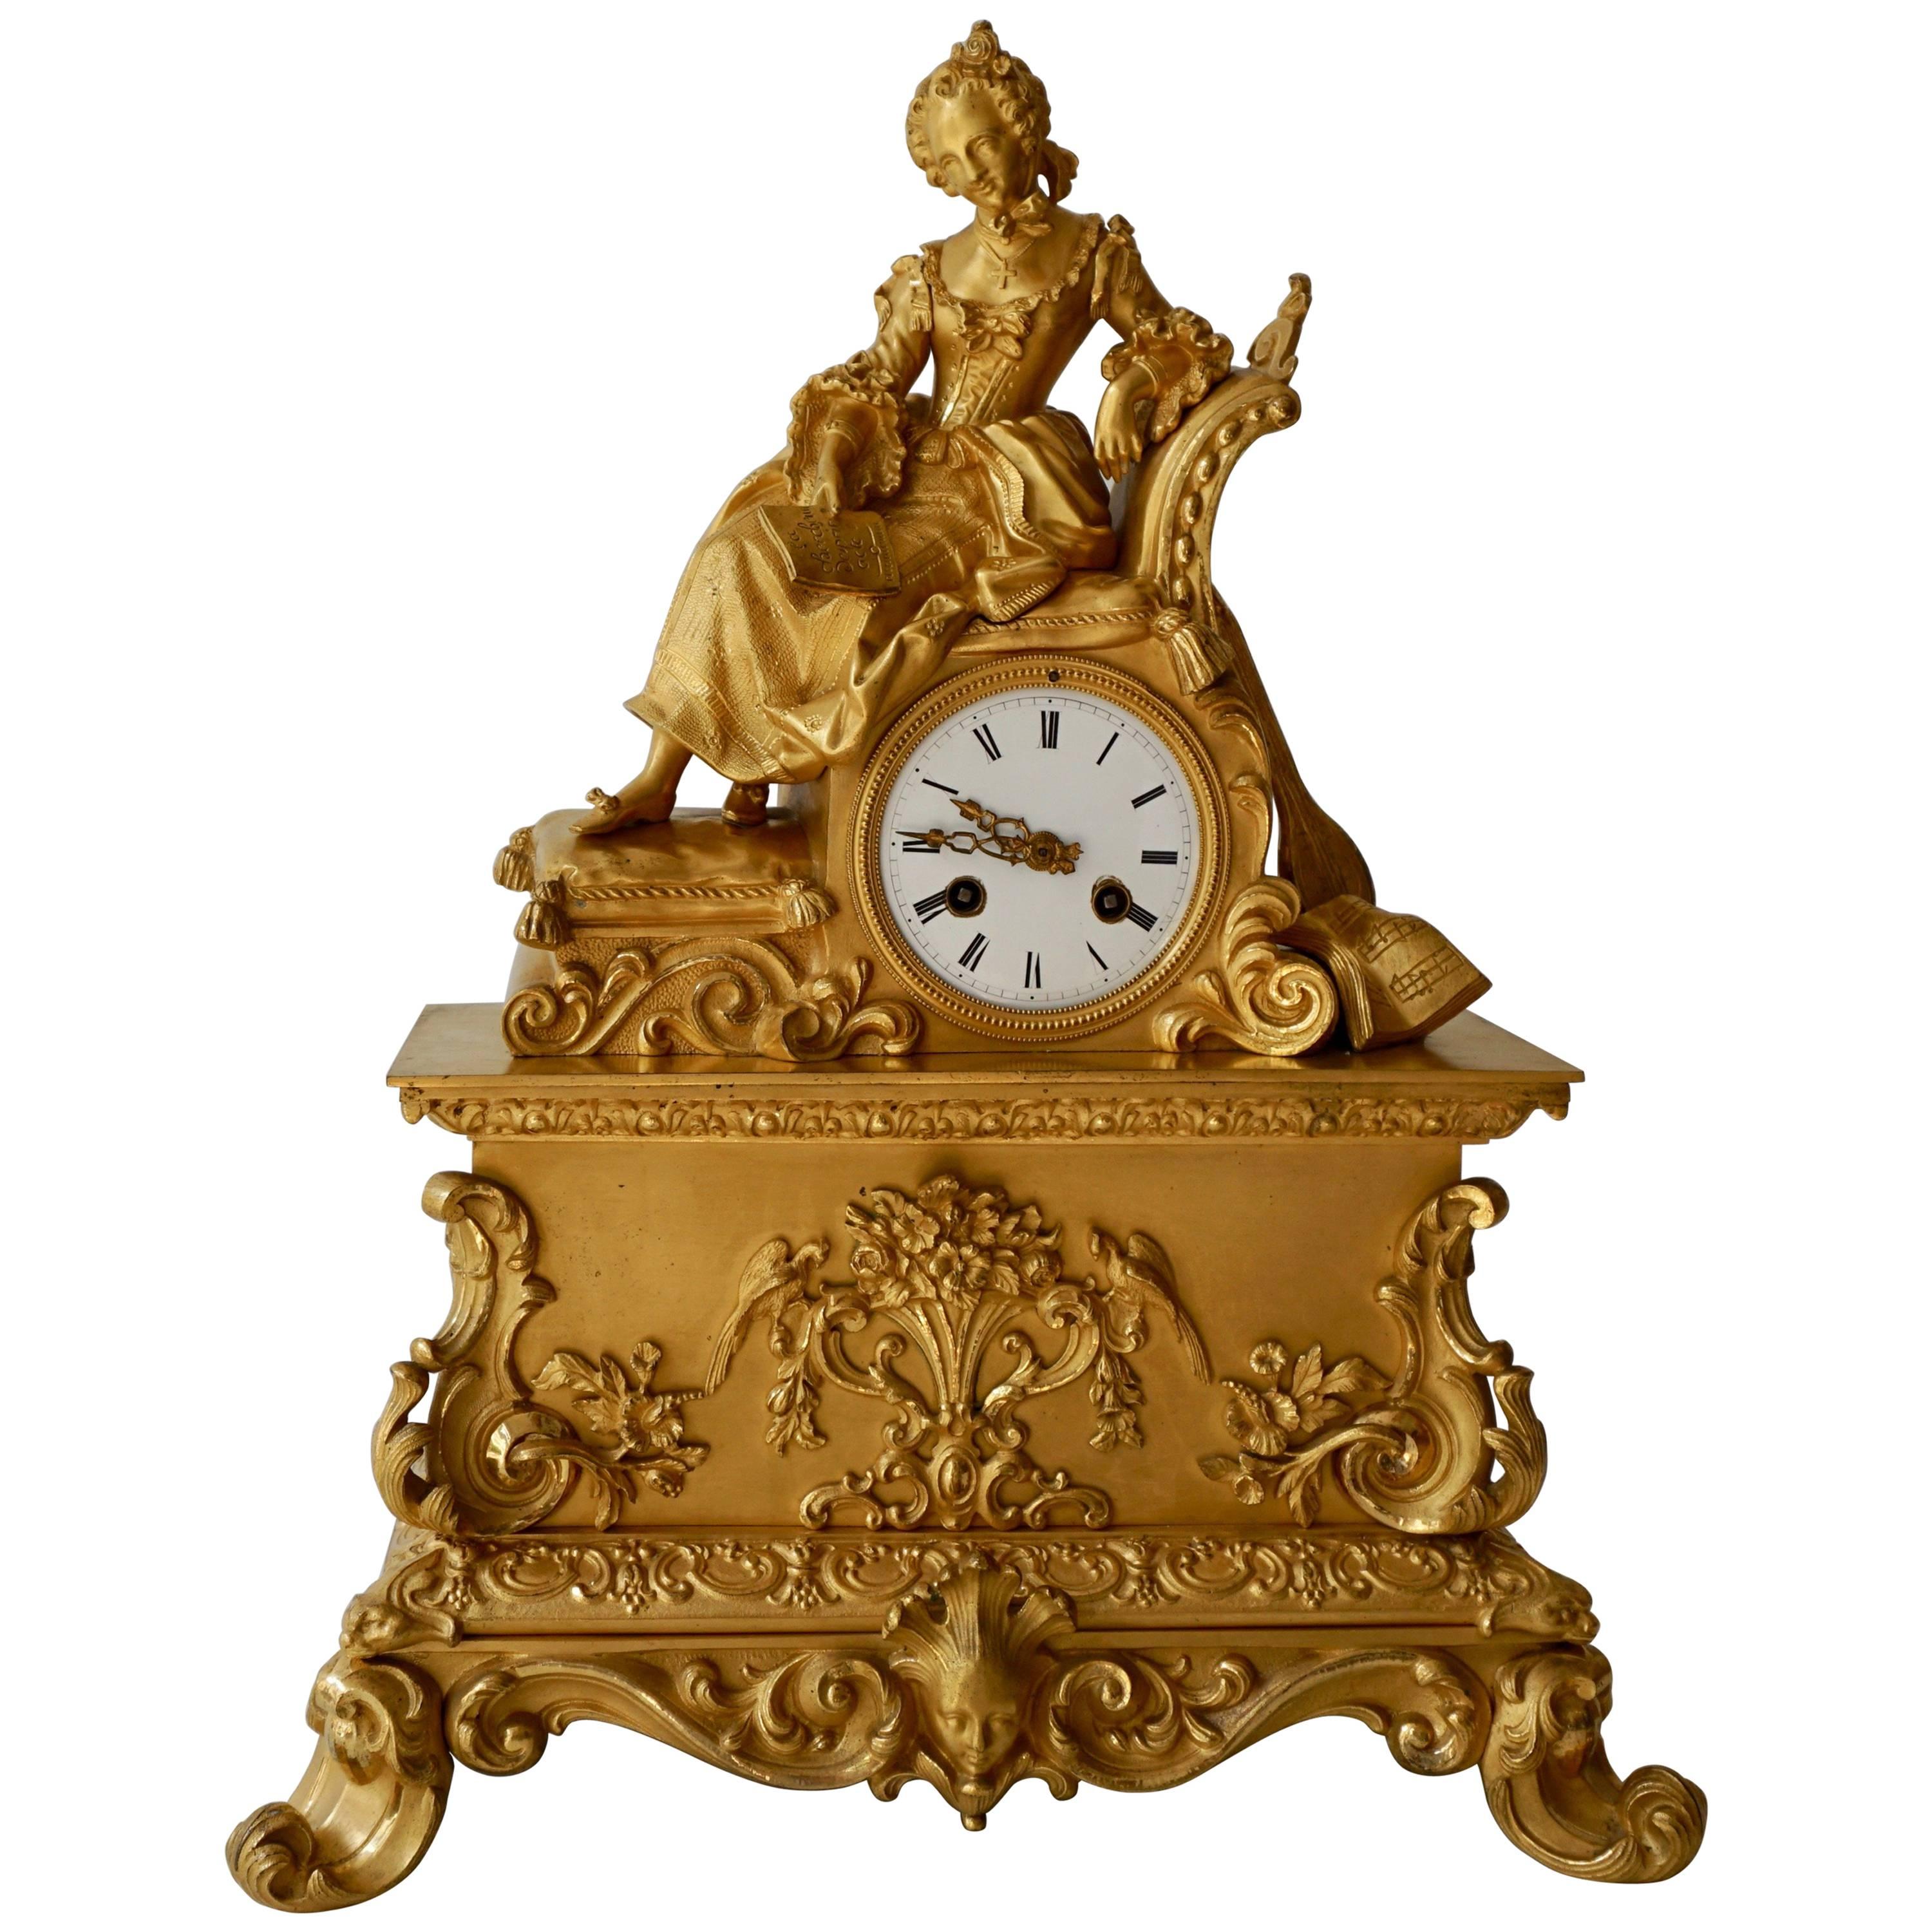 Very Fine and Elegant Fire, Gilt Bronze Mantle Clock in the Romantic Taste